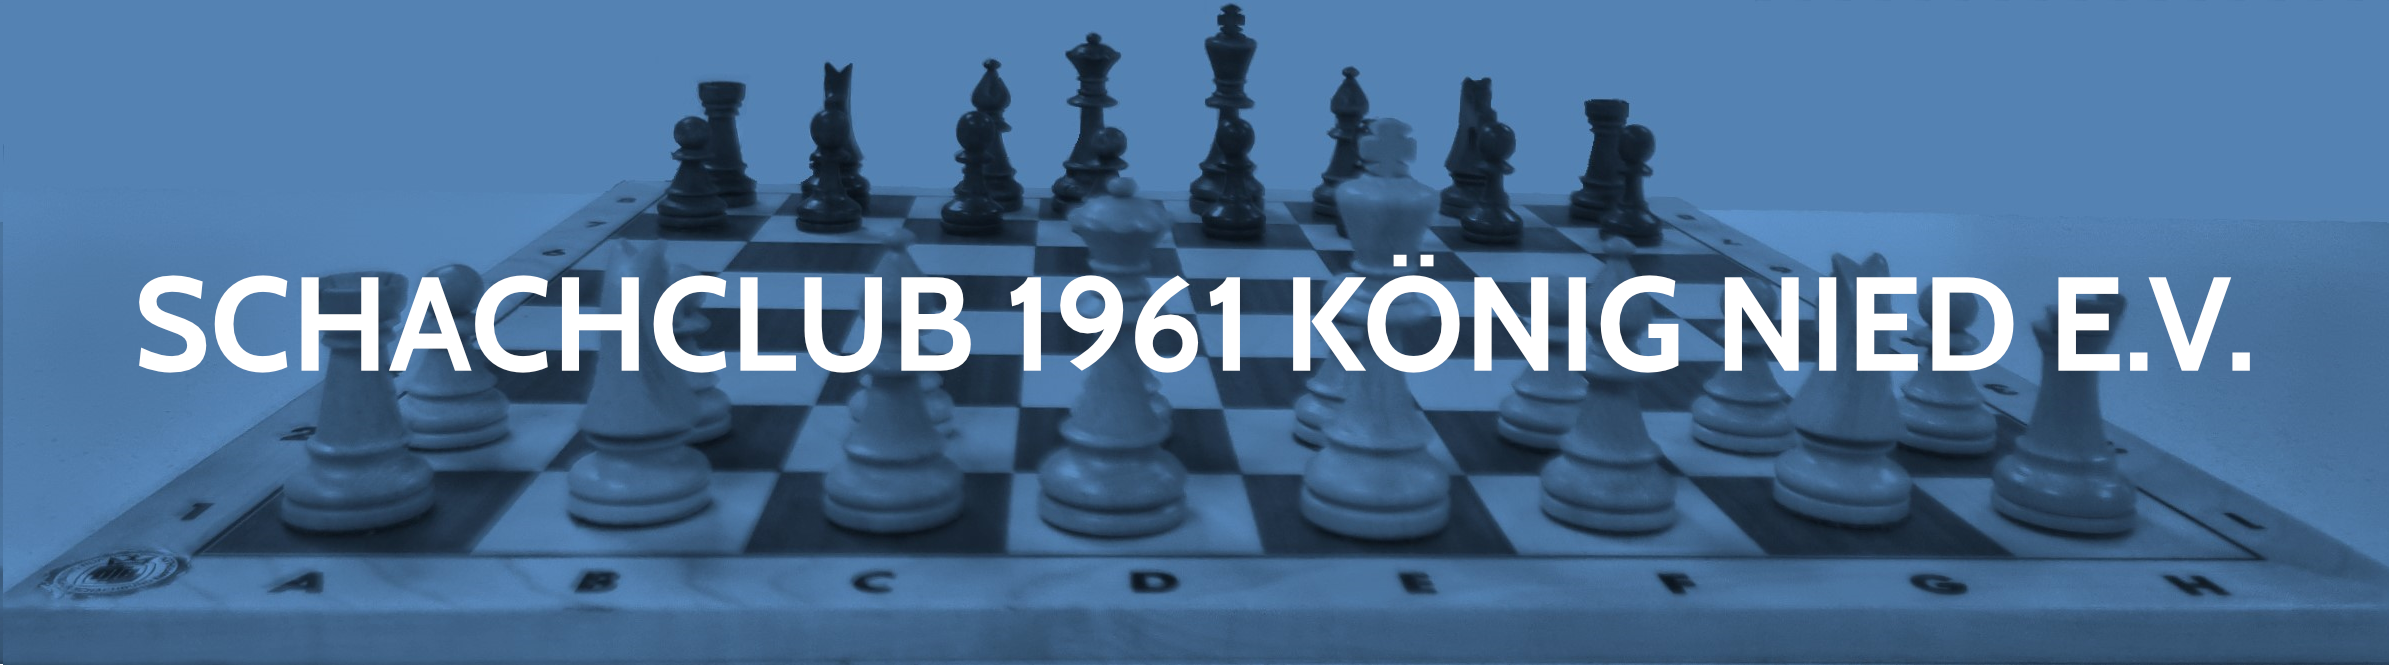 Schachclub 1961 König Nied e.V.